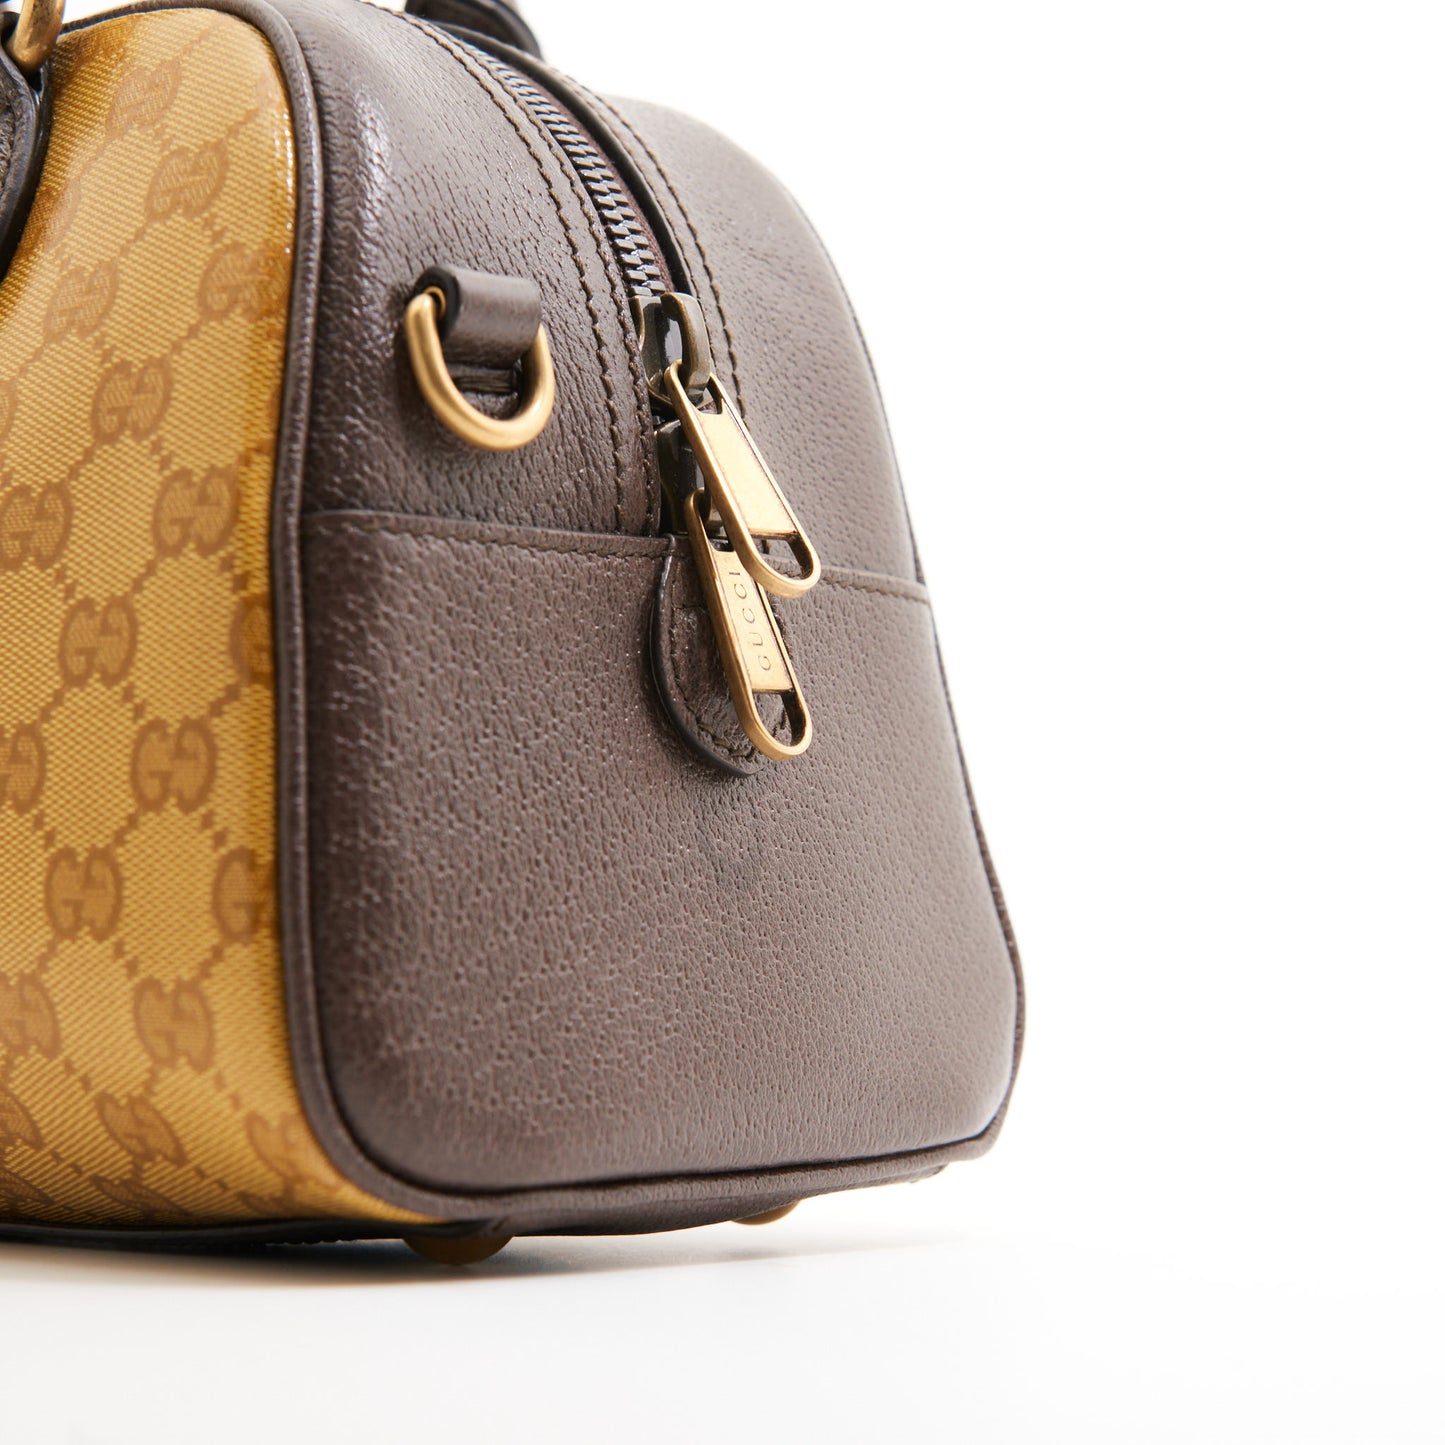 Gucci x Adidas Canvas Duffle Bag in Brown Monogram GHW